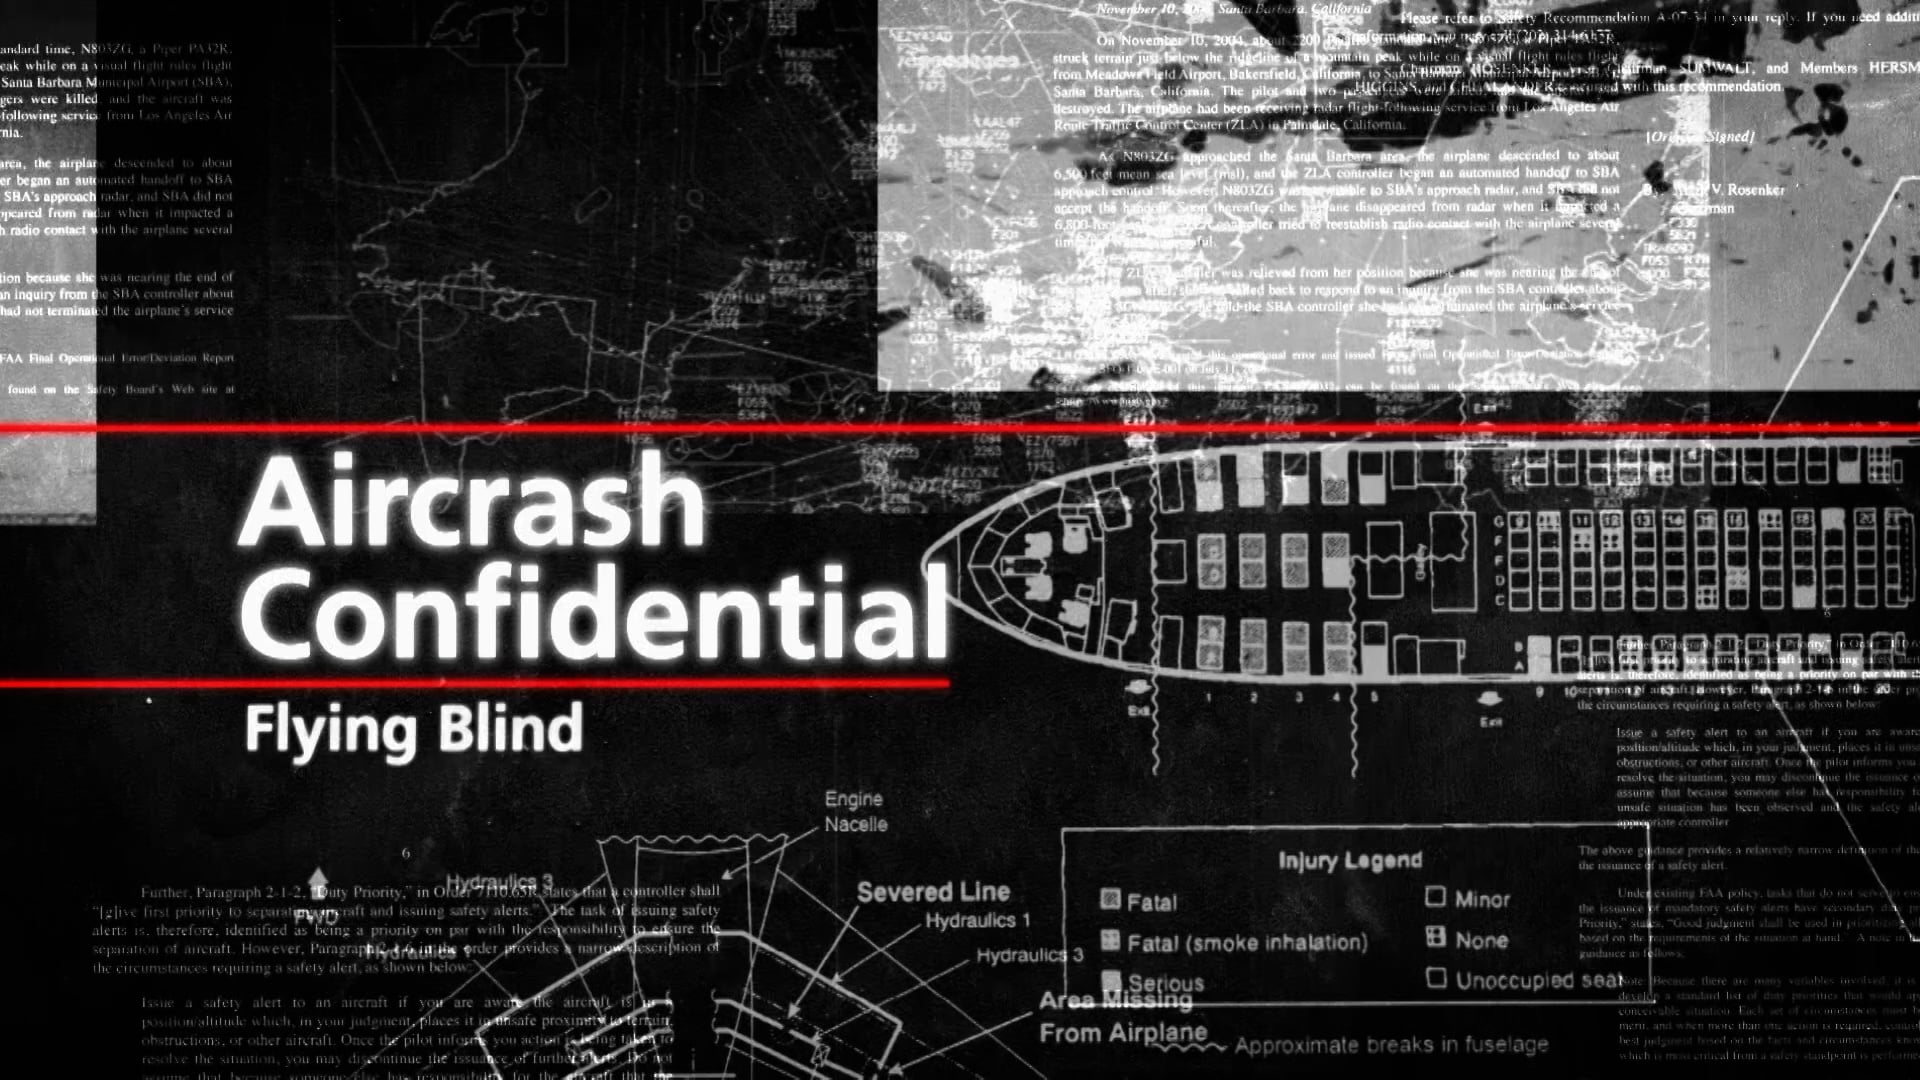 Aircrash Confidential S3 EP6 (Excerpt)